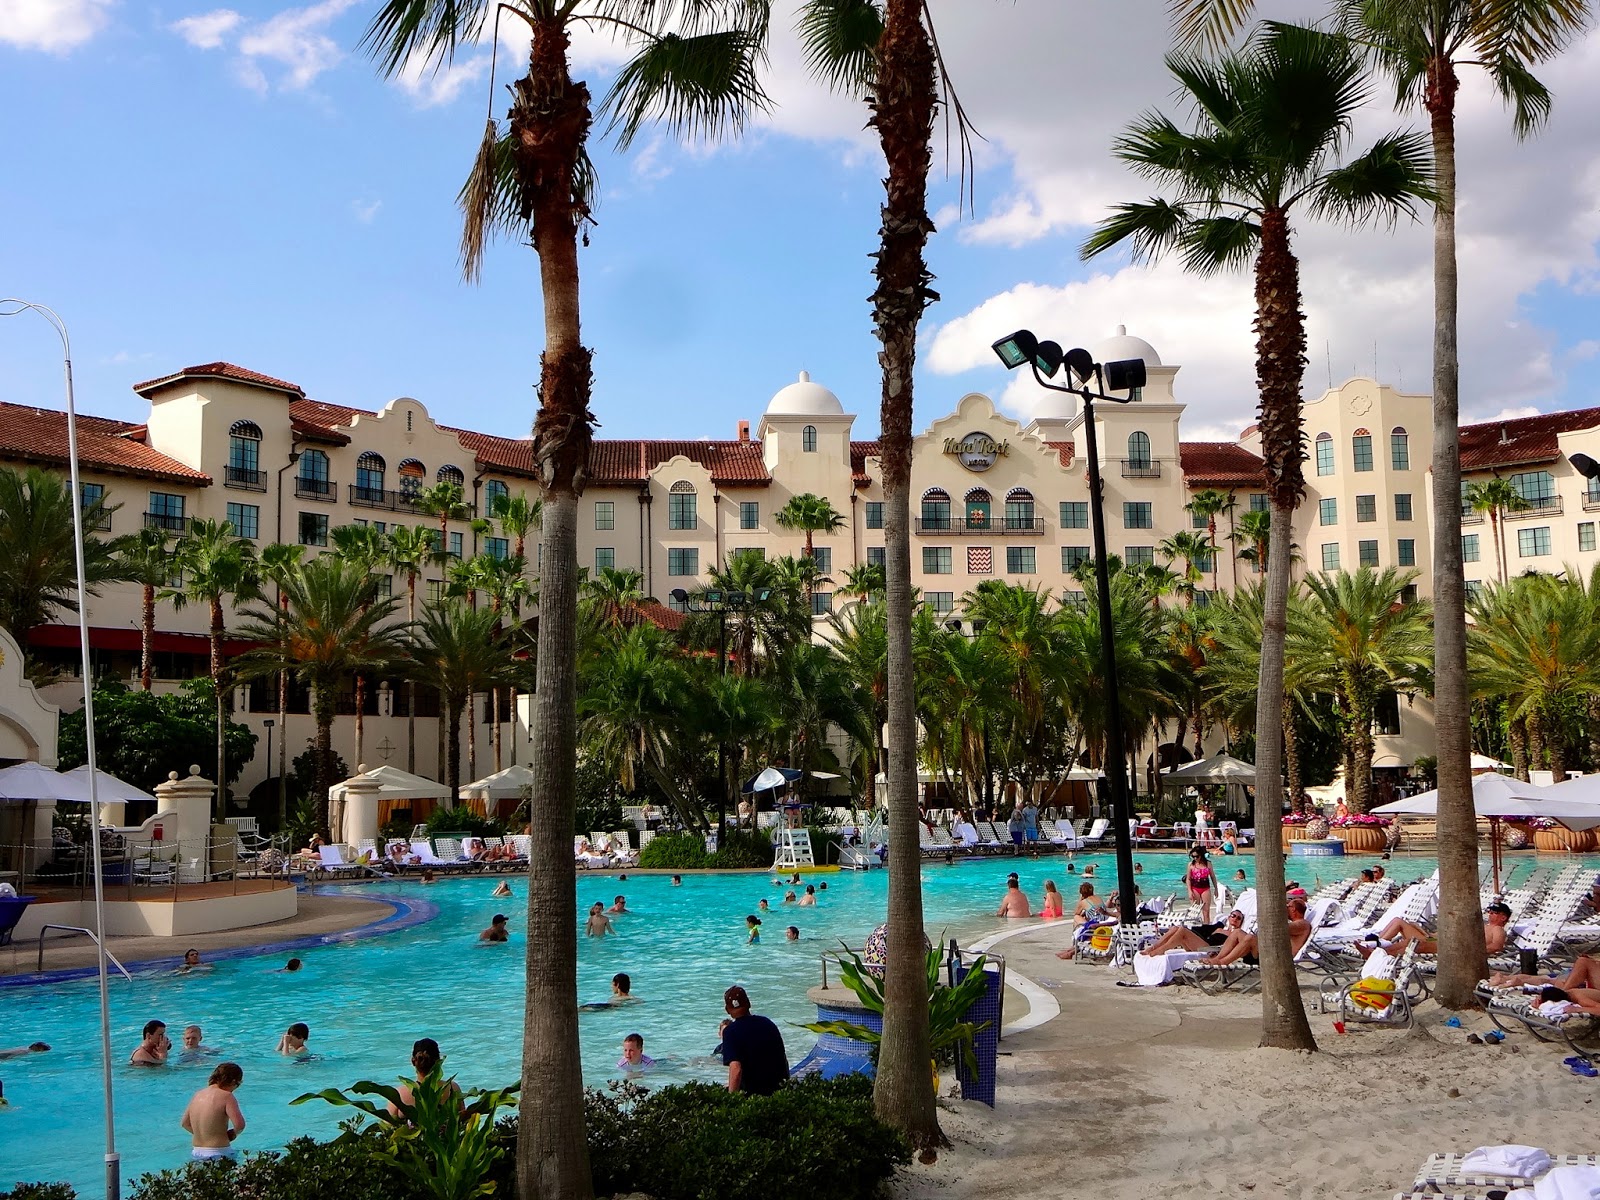 Is The Pool At Hard Rock Hotel Orlando Heated - kuraidesigns